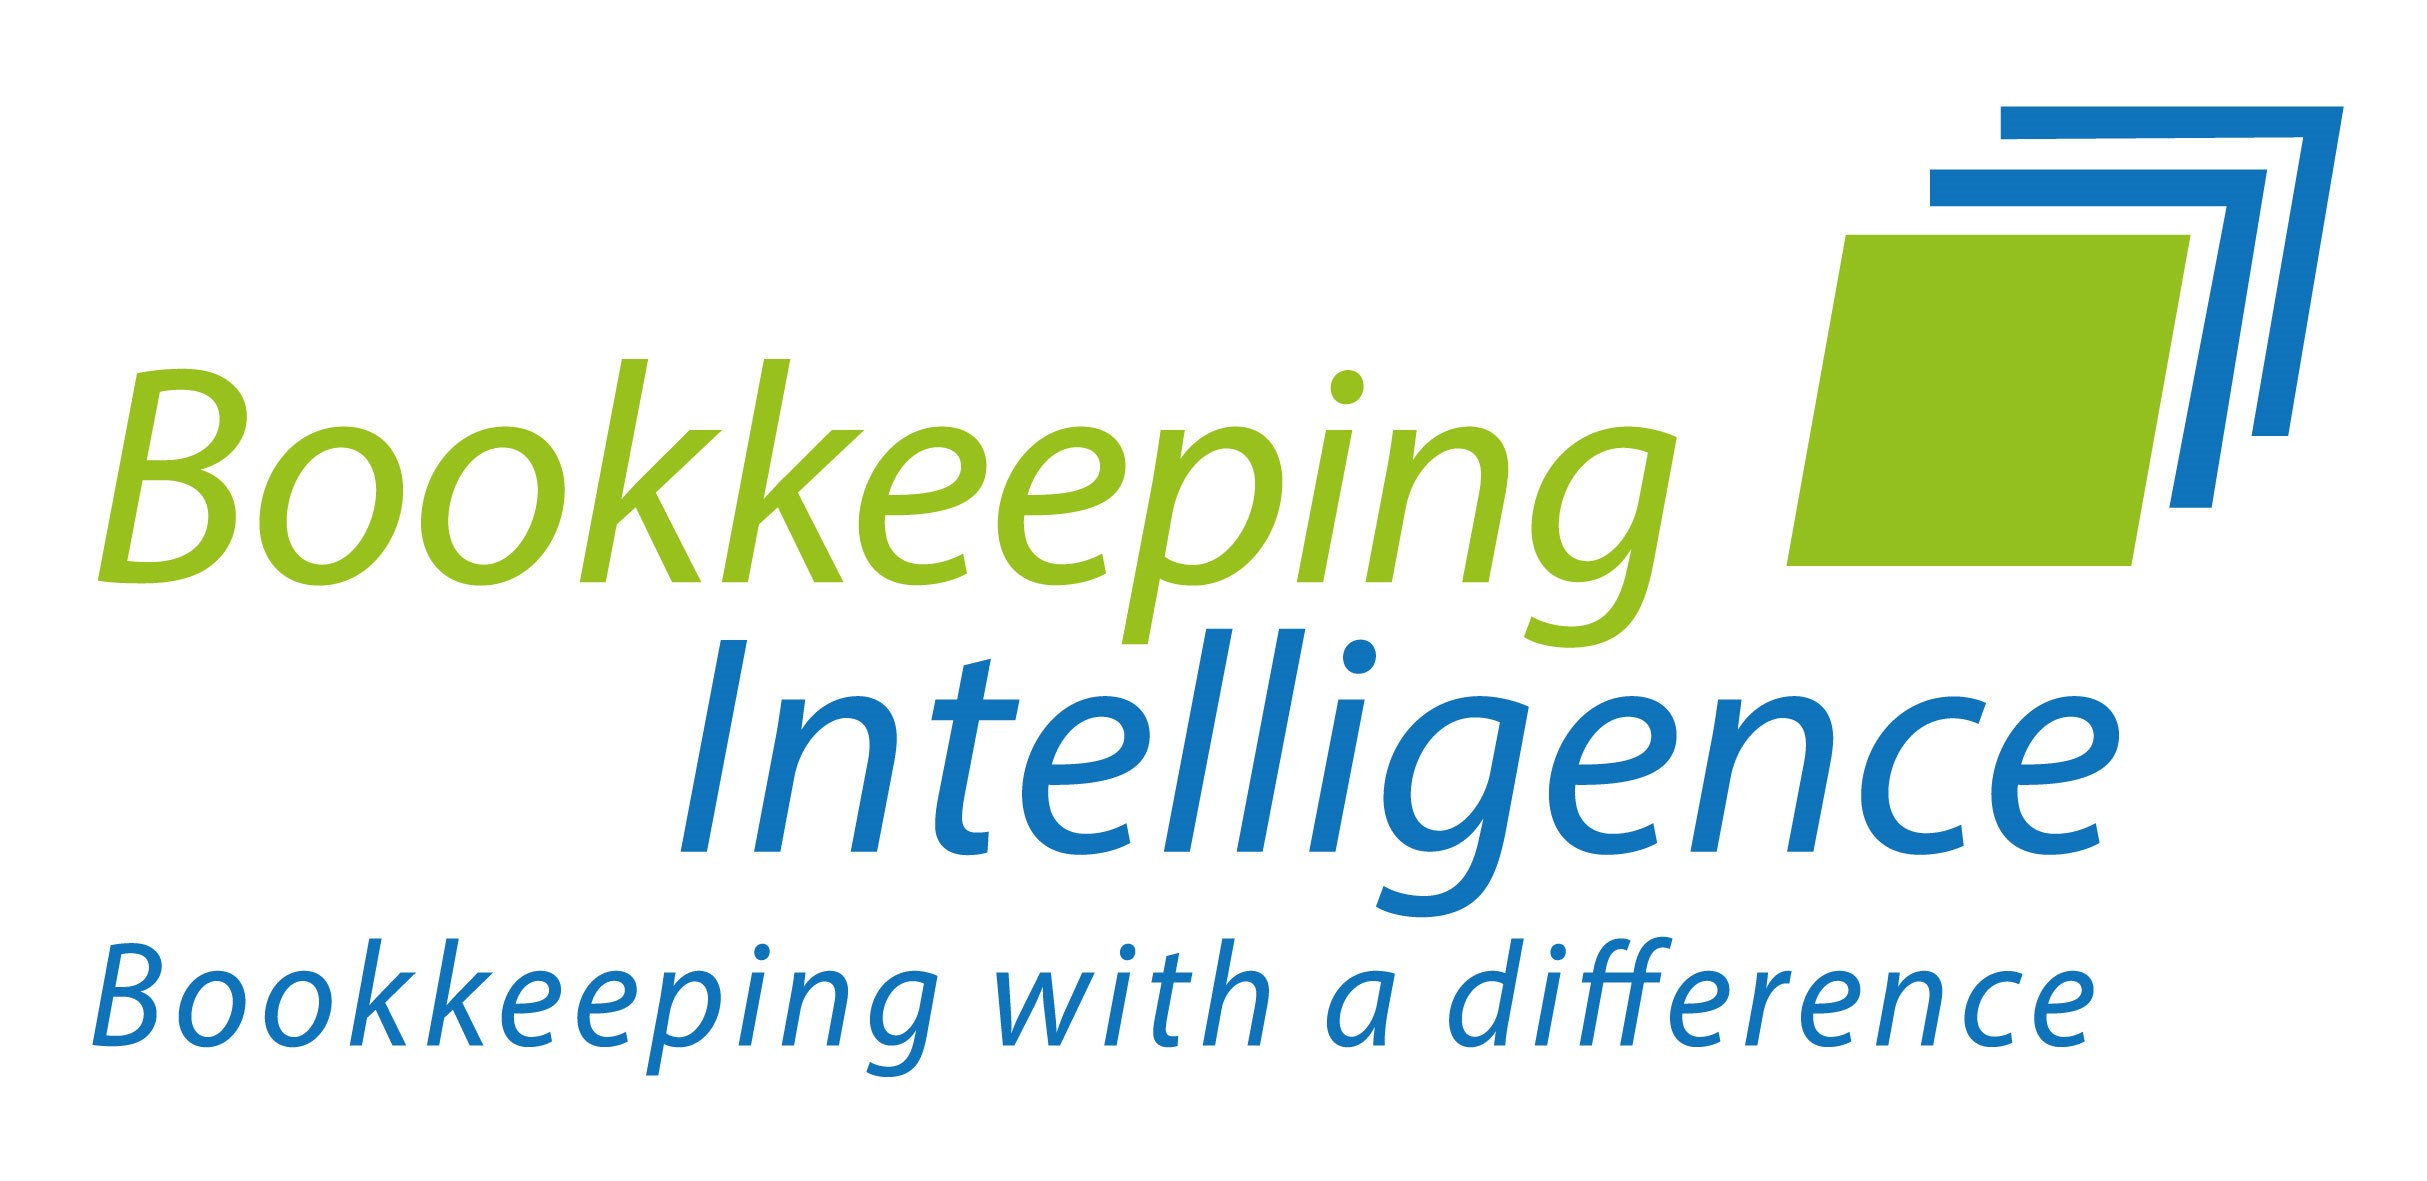 Bookkeeping Intelligence